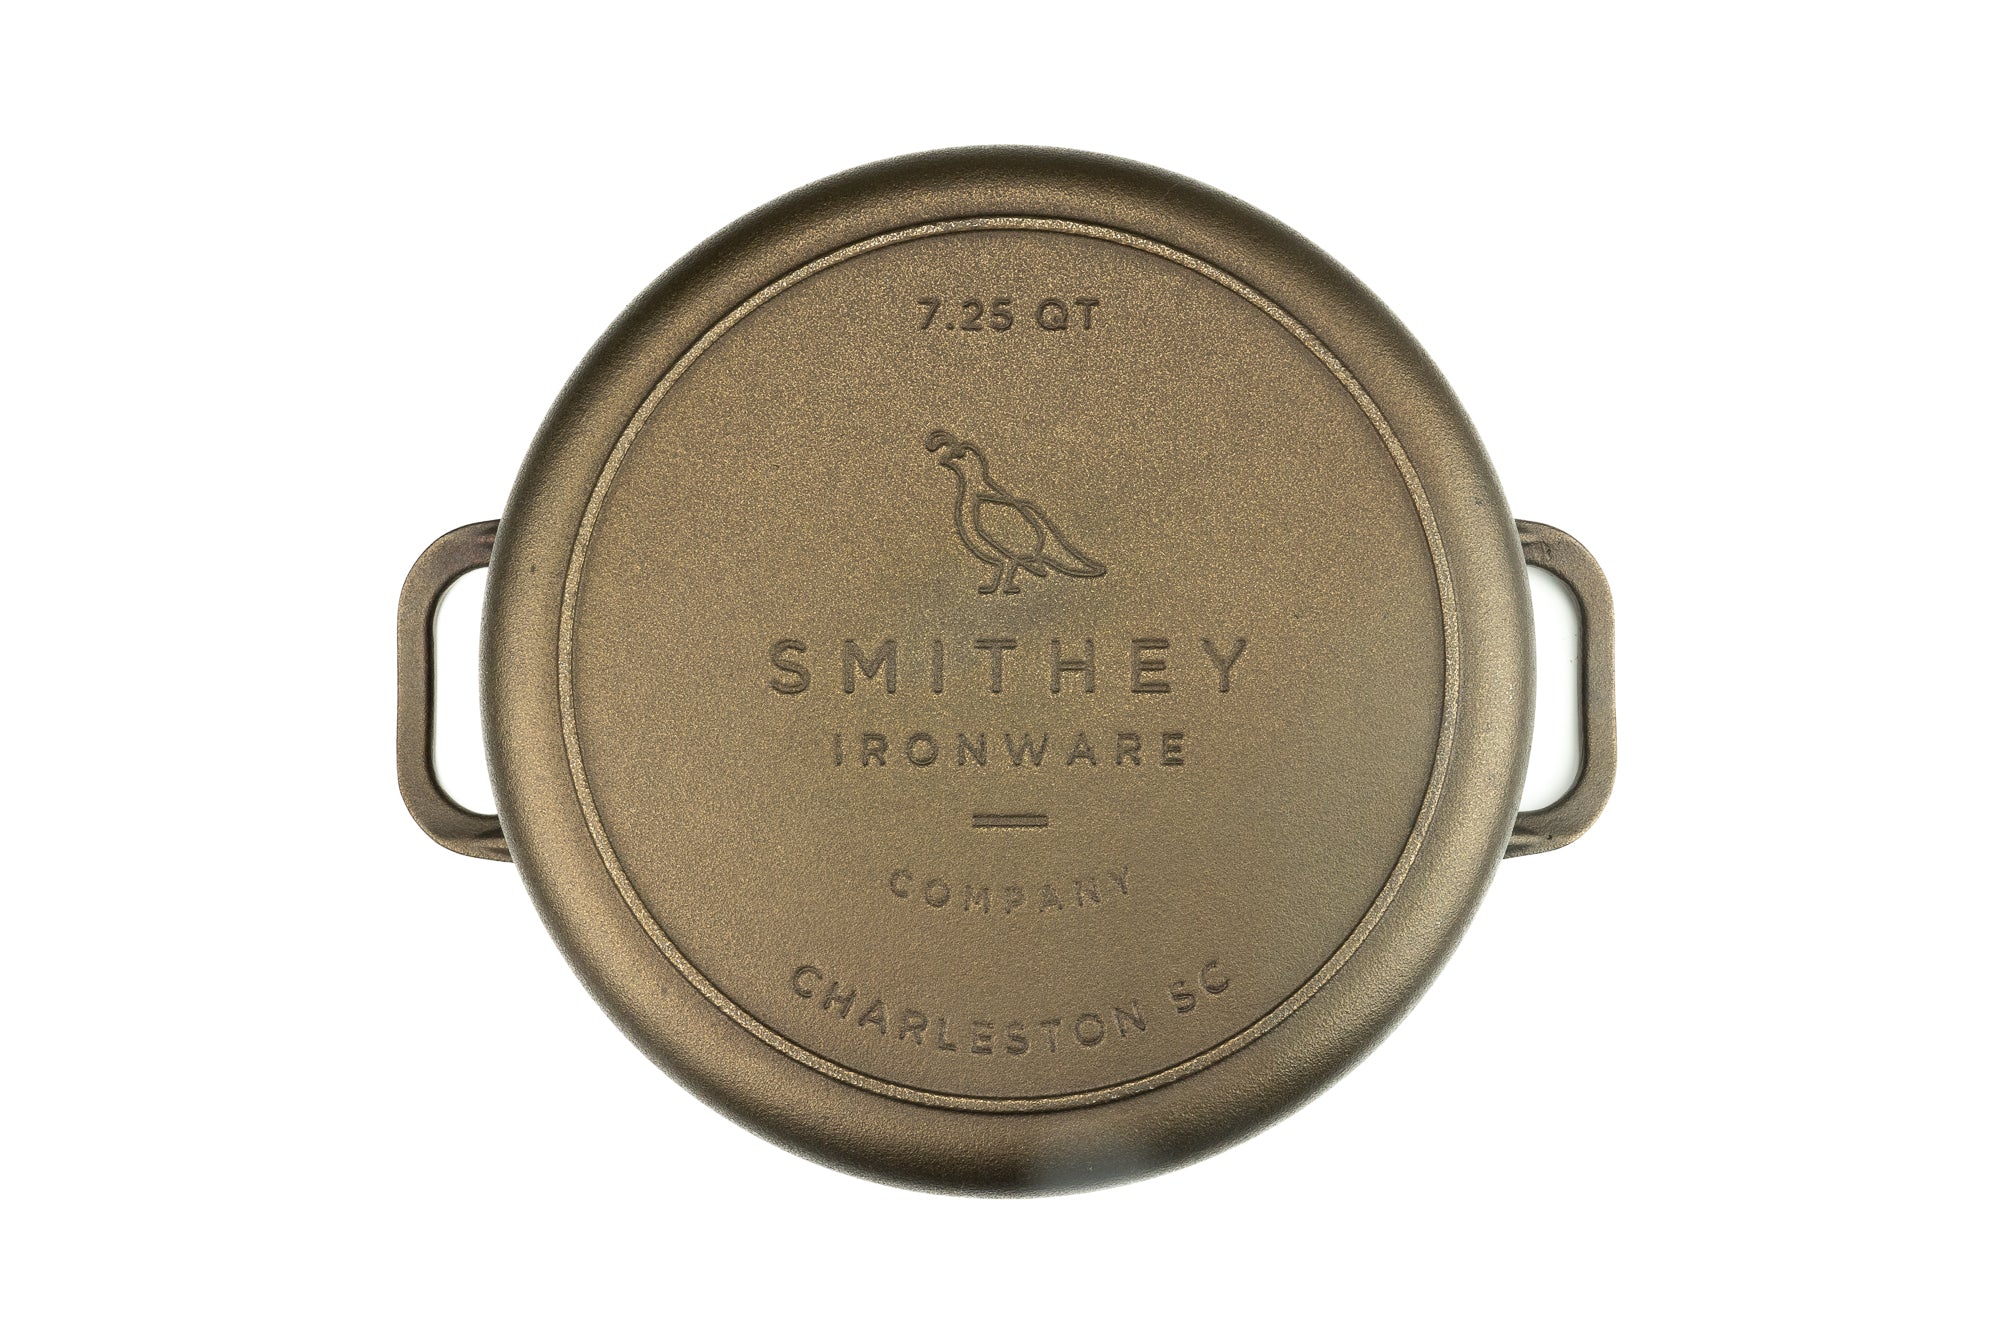 Smithey 7.25 QT Dutch Oven